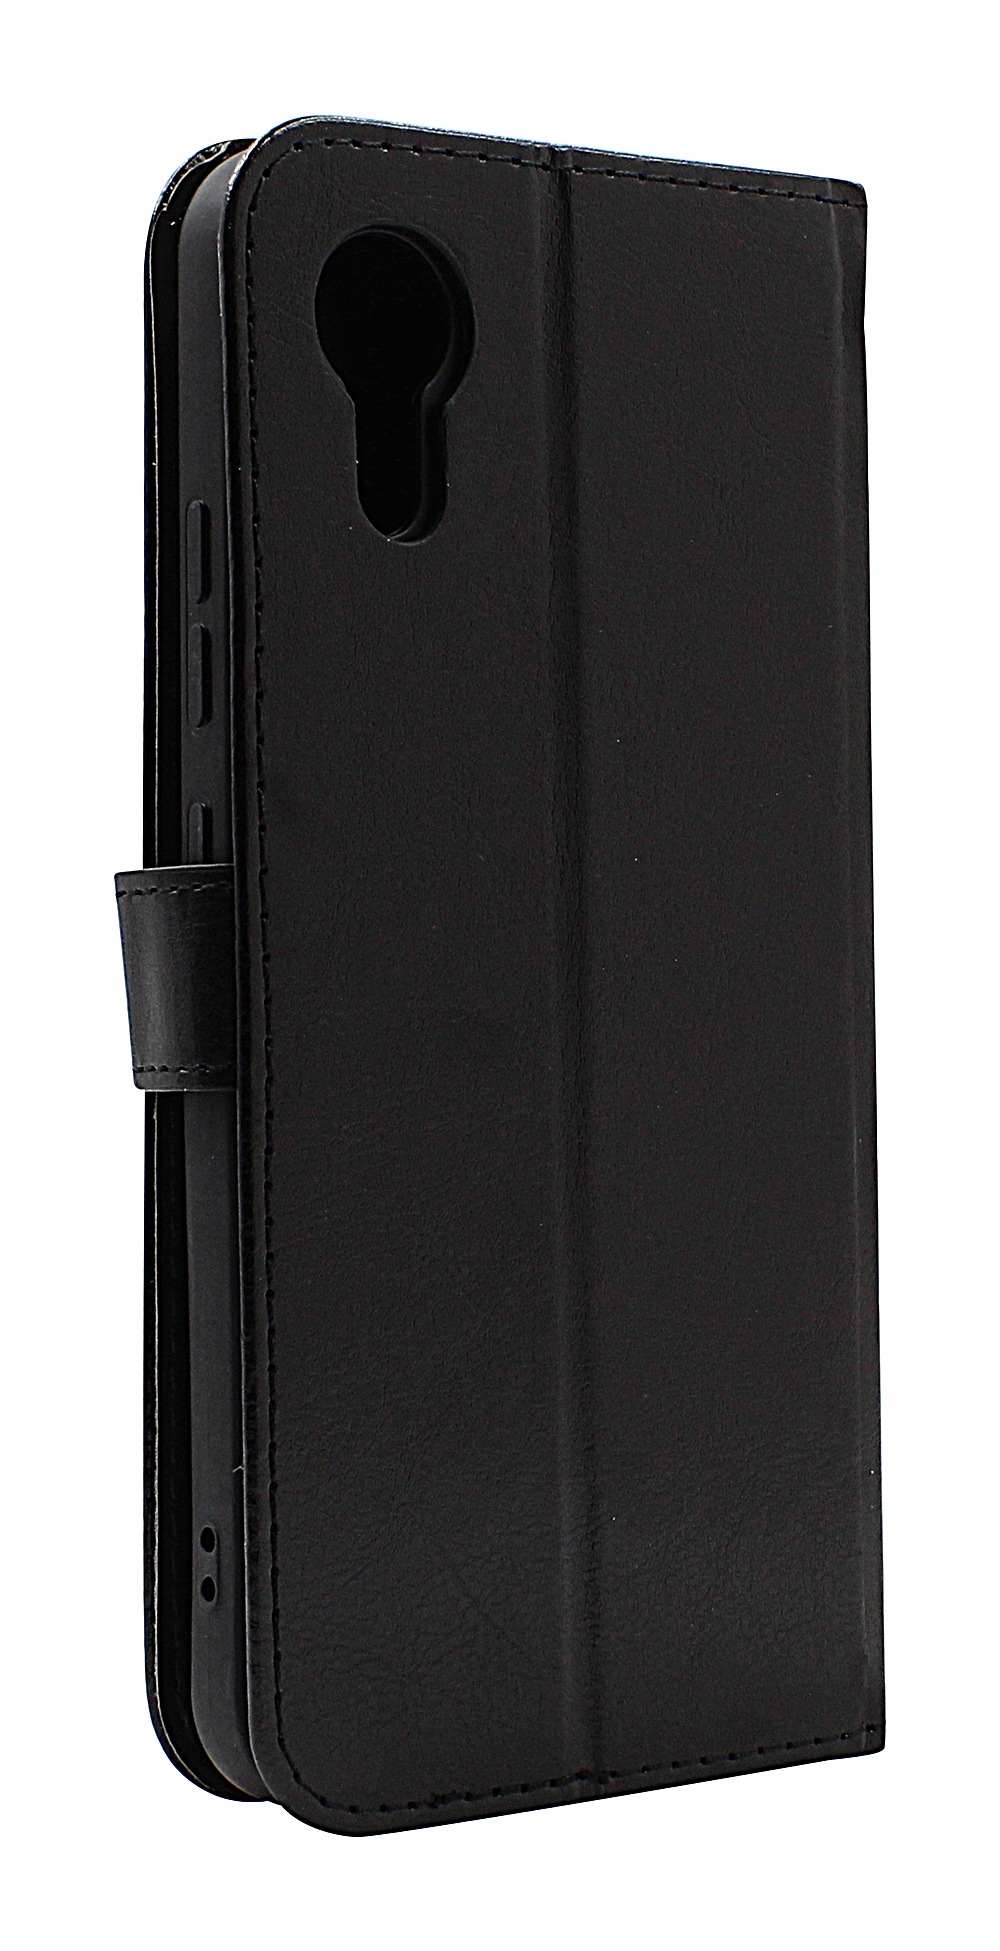 Crazy Horse Wallet Samsung Galaxy Xcover7 5G (SM-G556B)